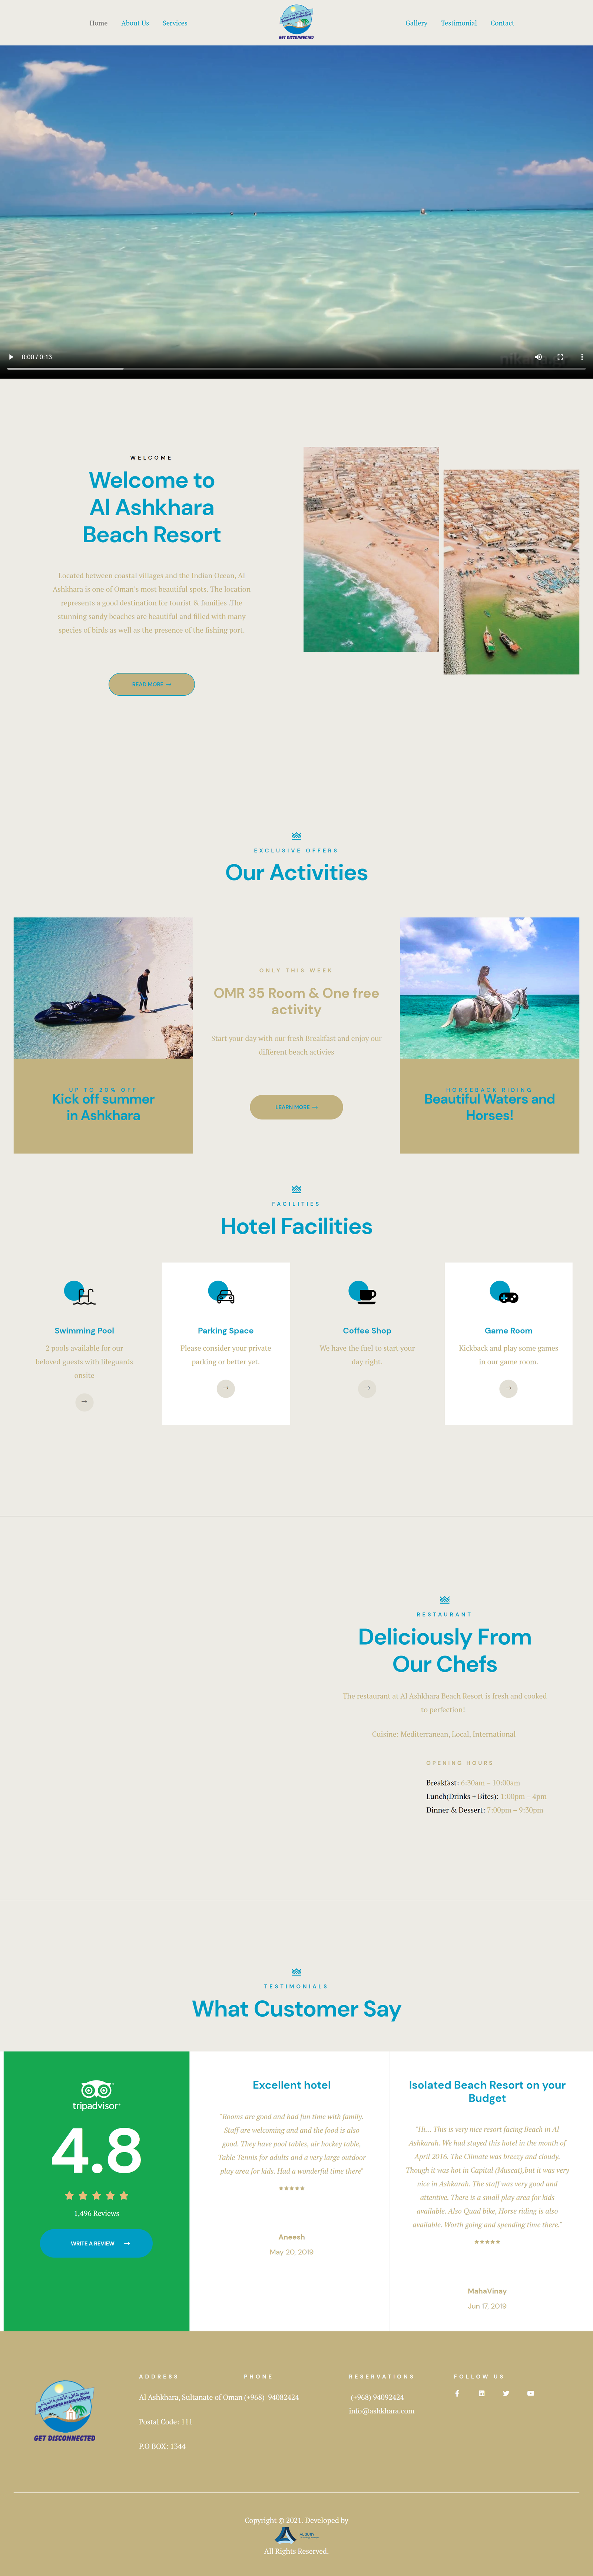 Al Ashkhara Beach Resort website